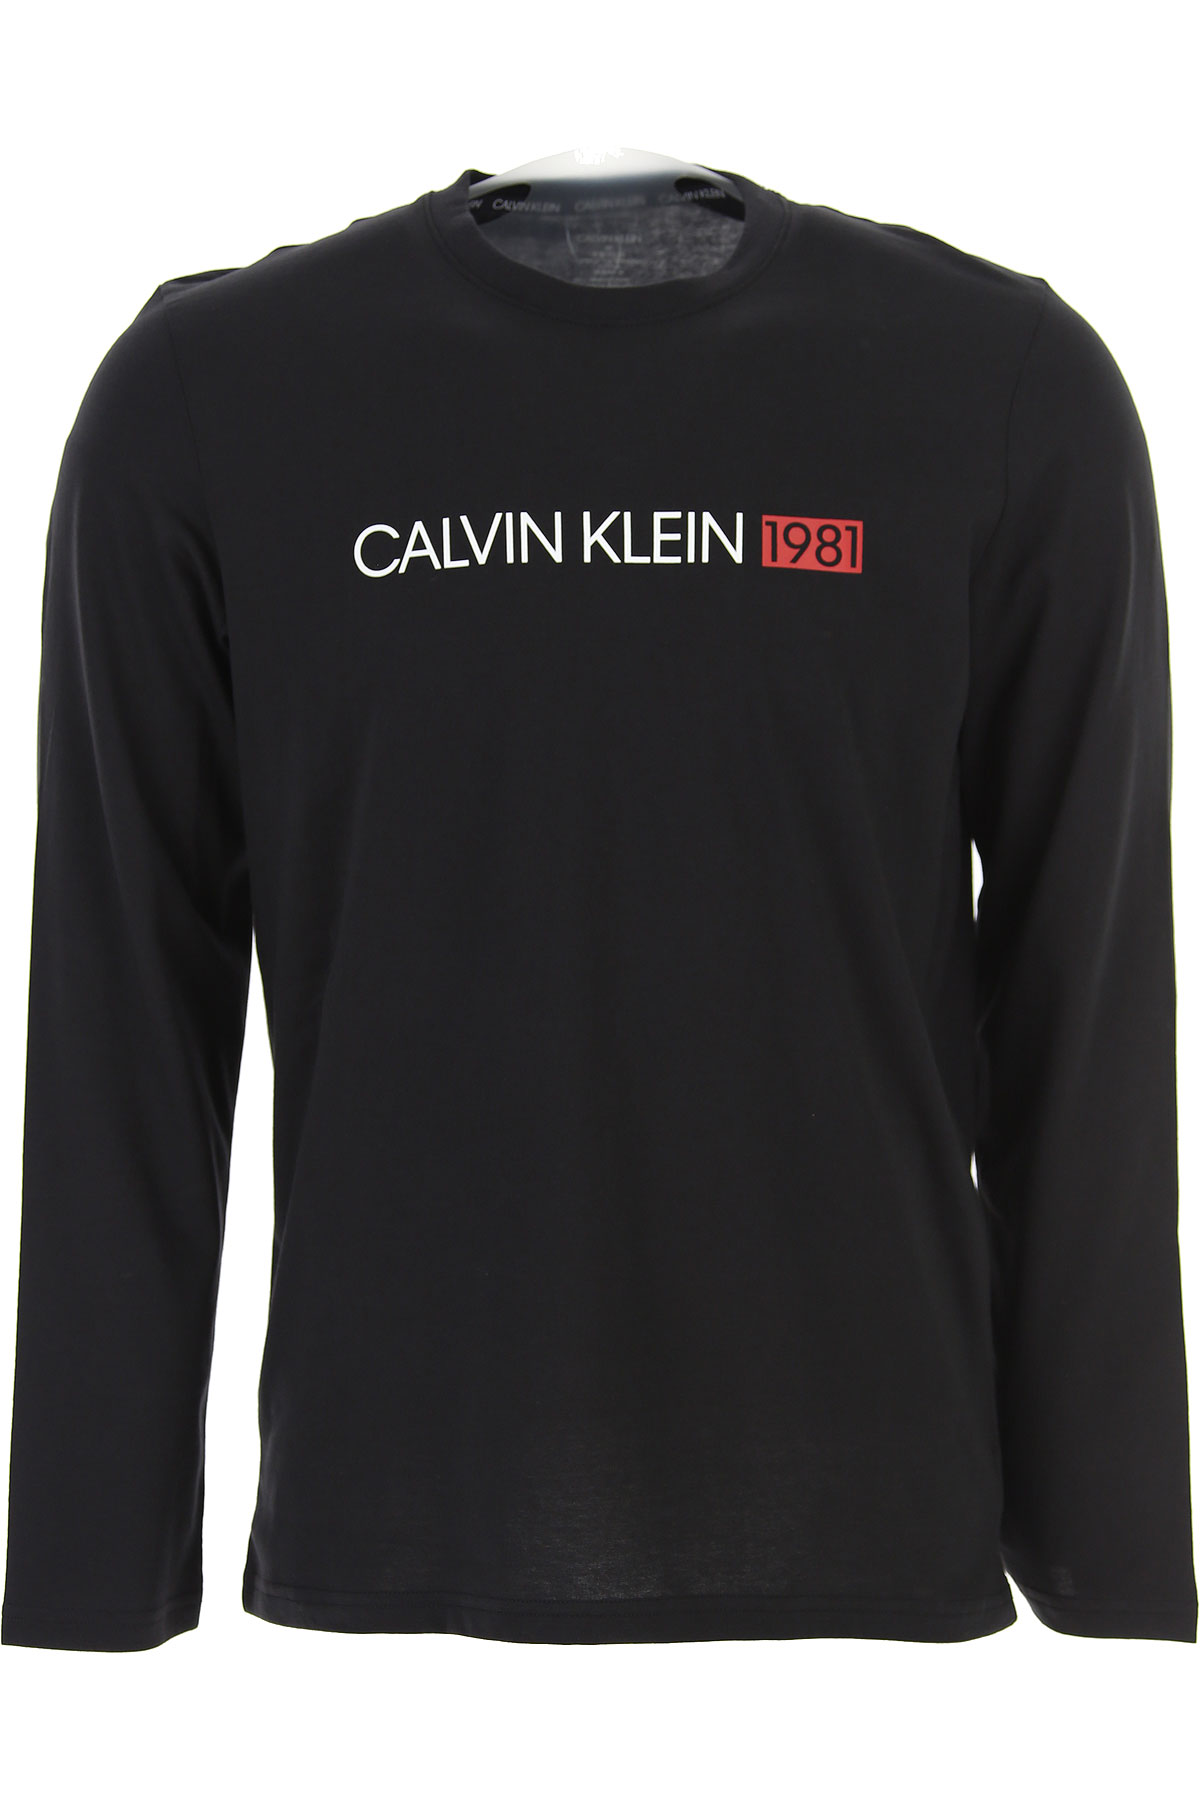 Mens Clothing Calvin Klein, Style code: nm1705e-001-